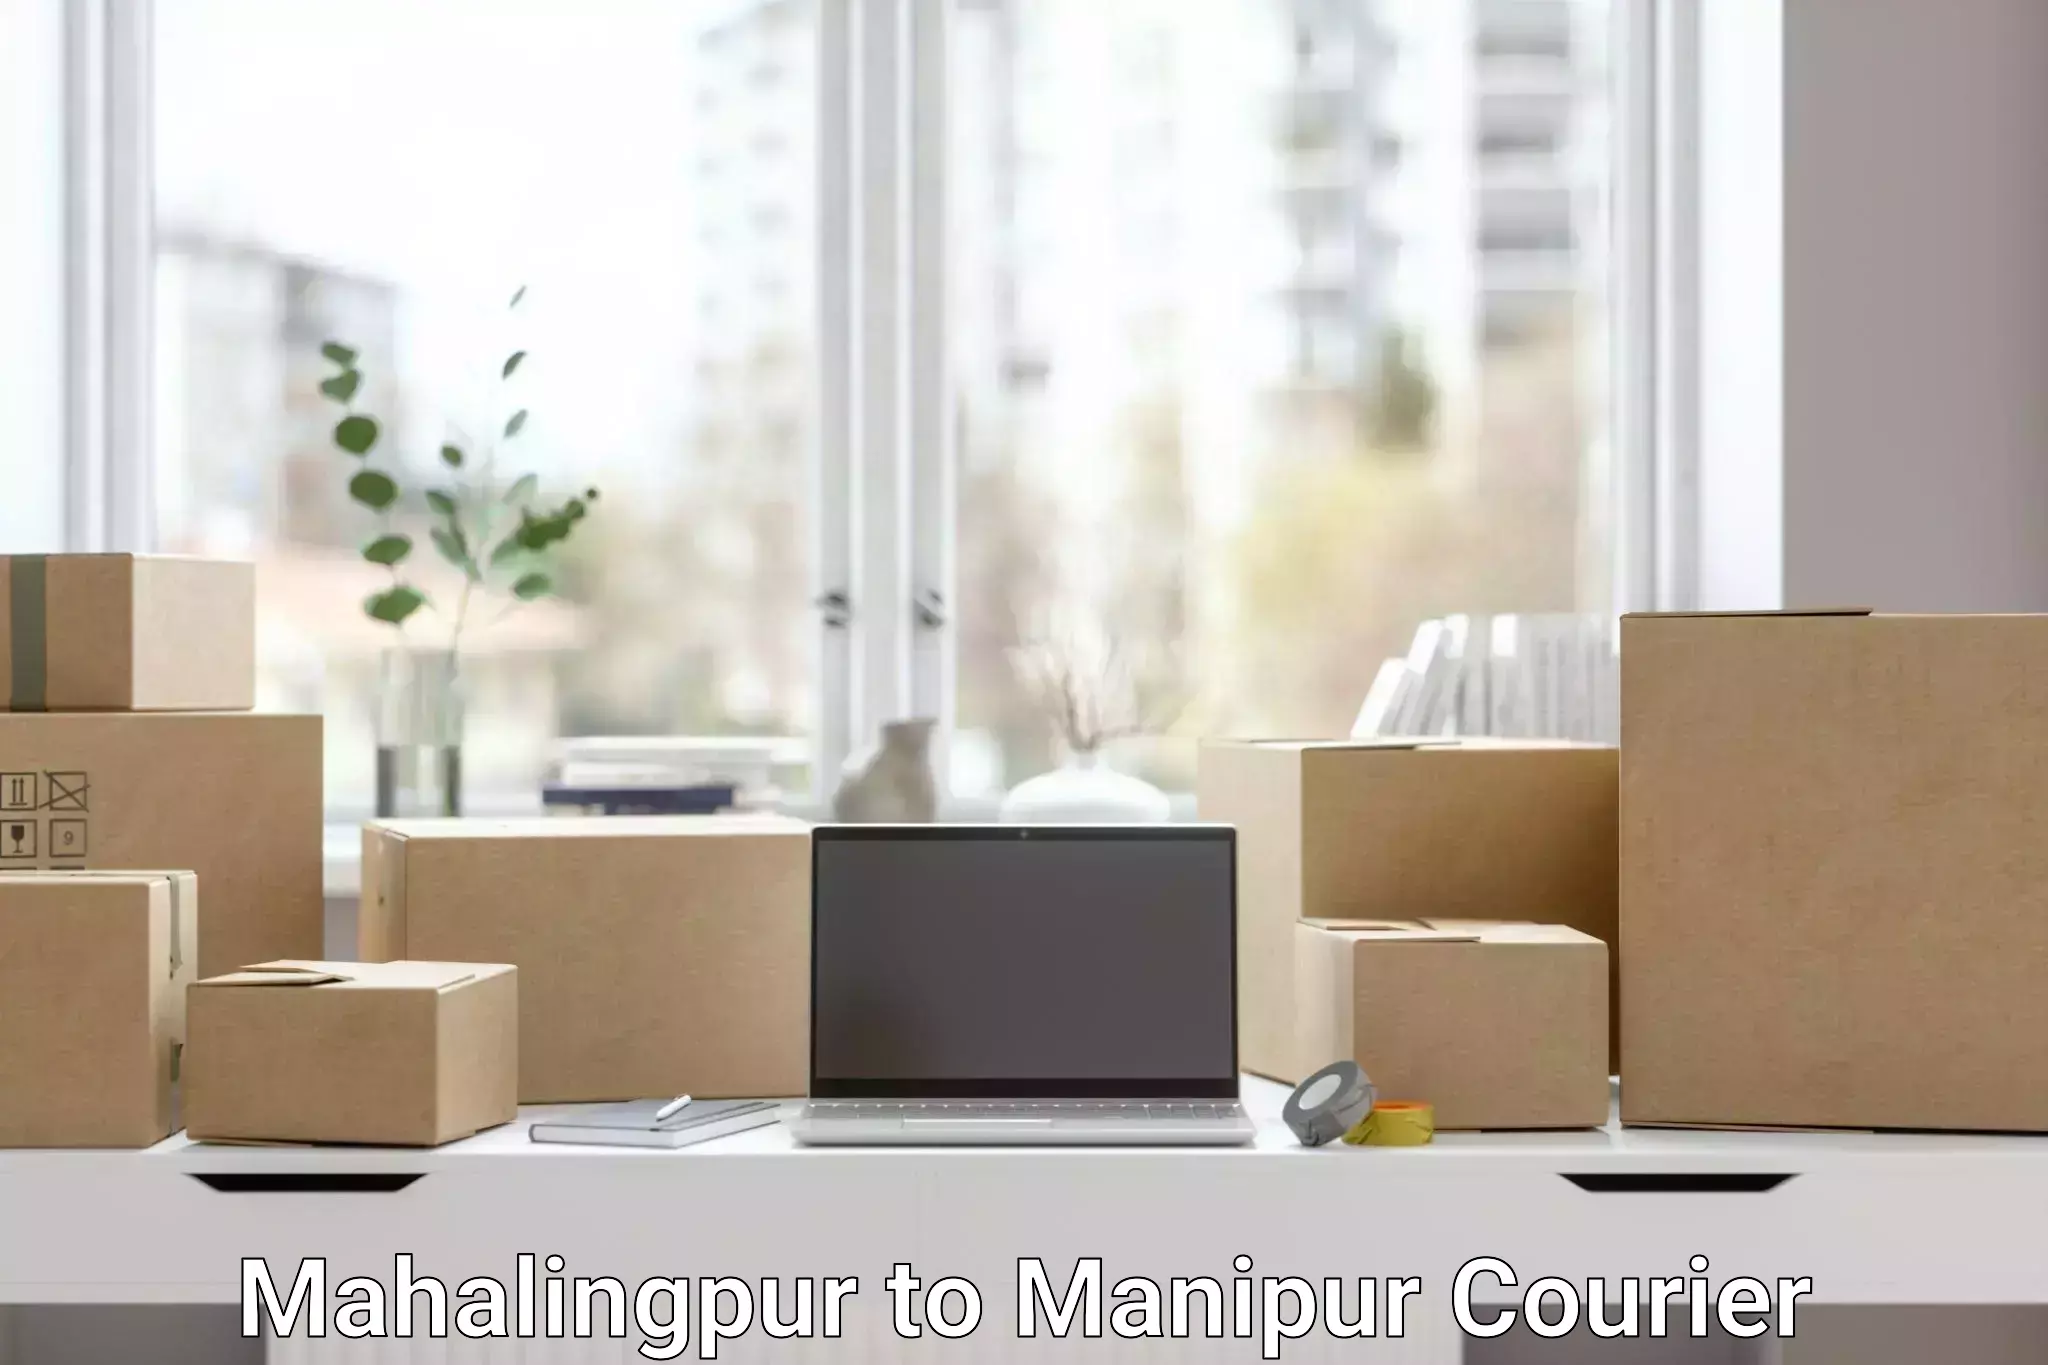 Customer-centric shipping in Mahalingpur to Imphal